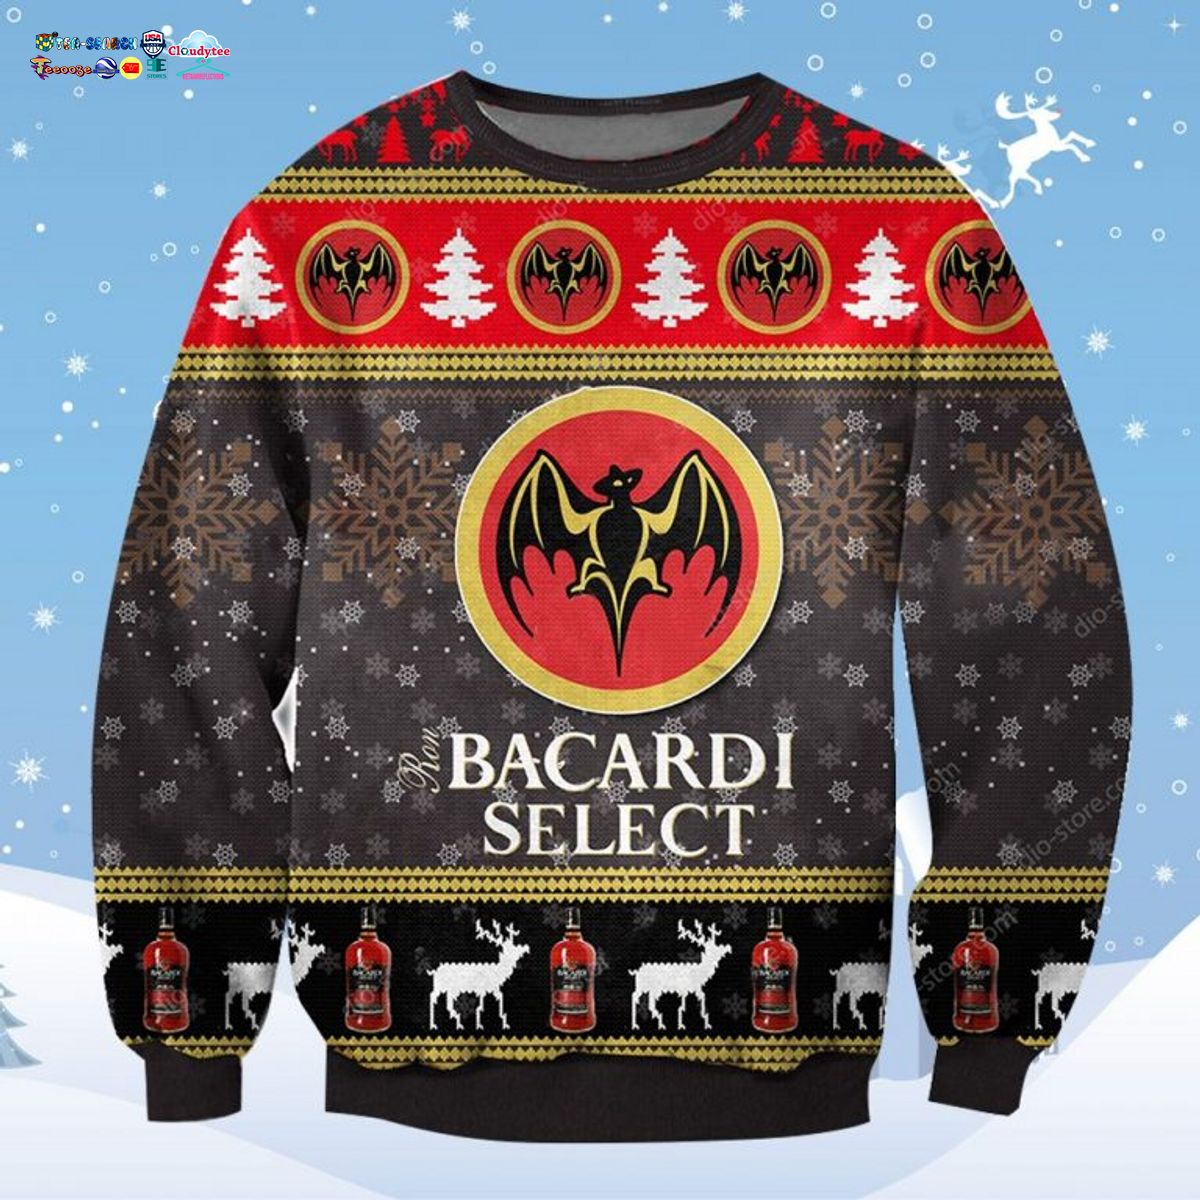 Bacardi Select Ugly Christmas Sweater